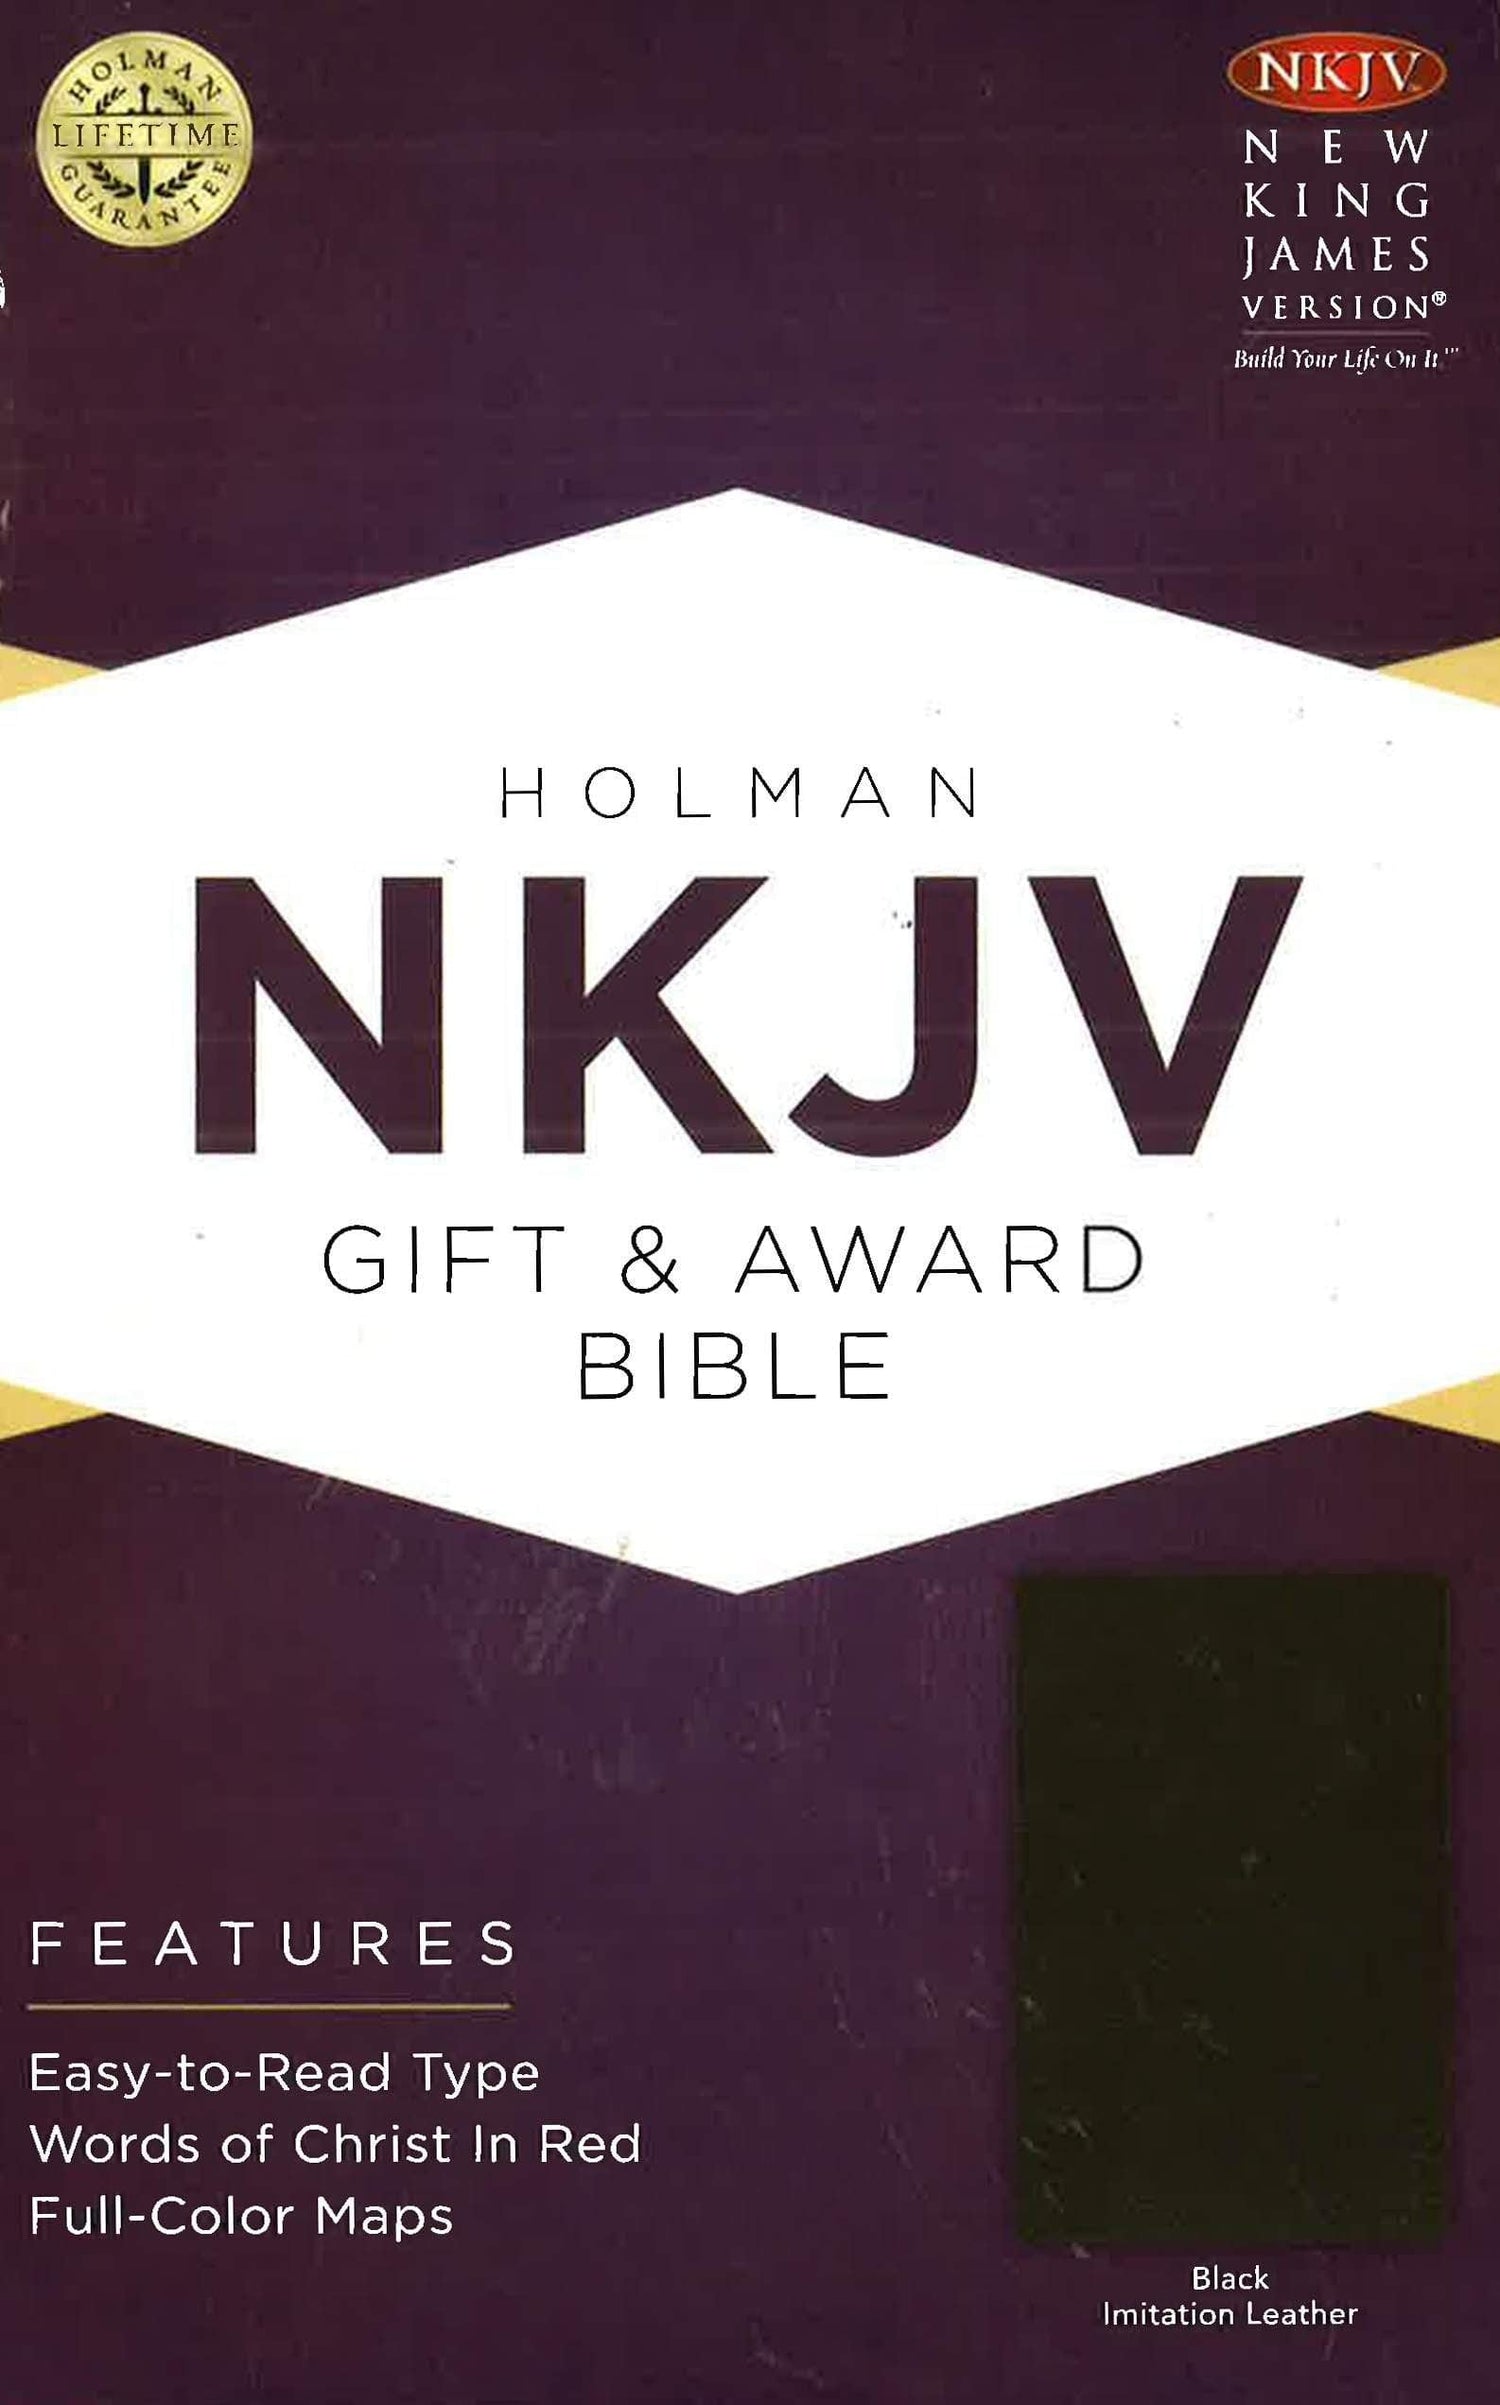 Nkjv Gift & Award Bible, Black Imitation Leather